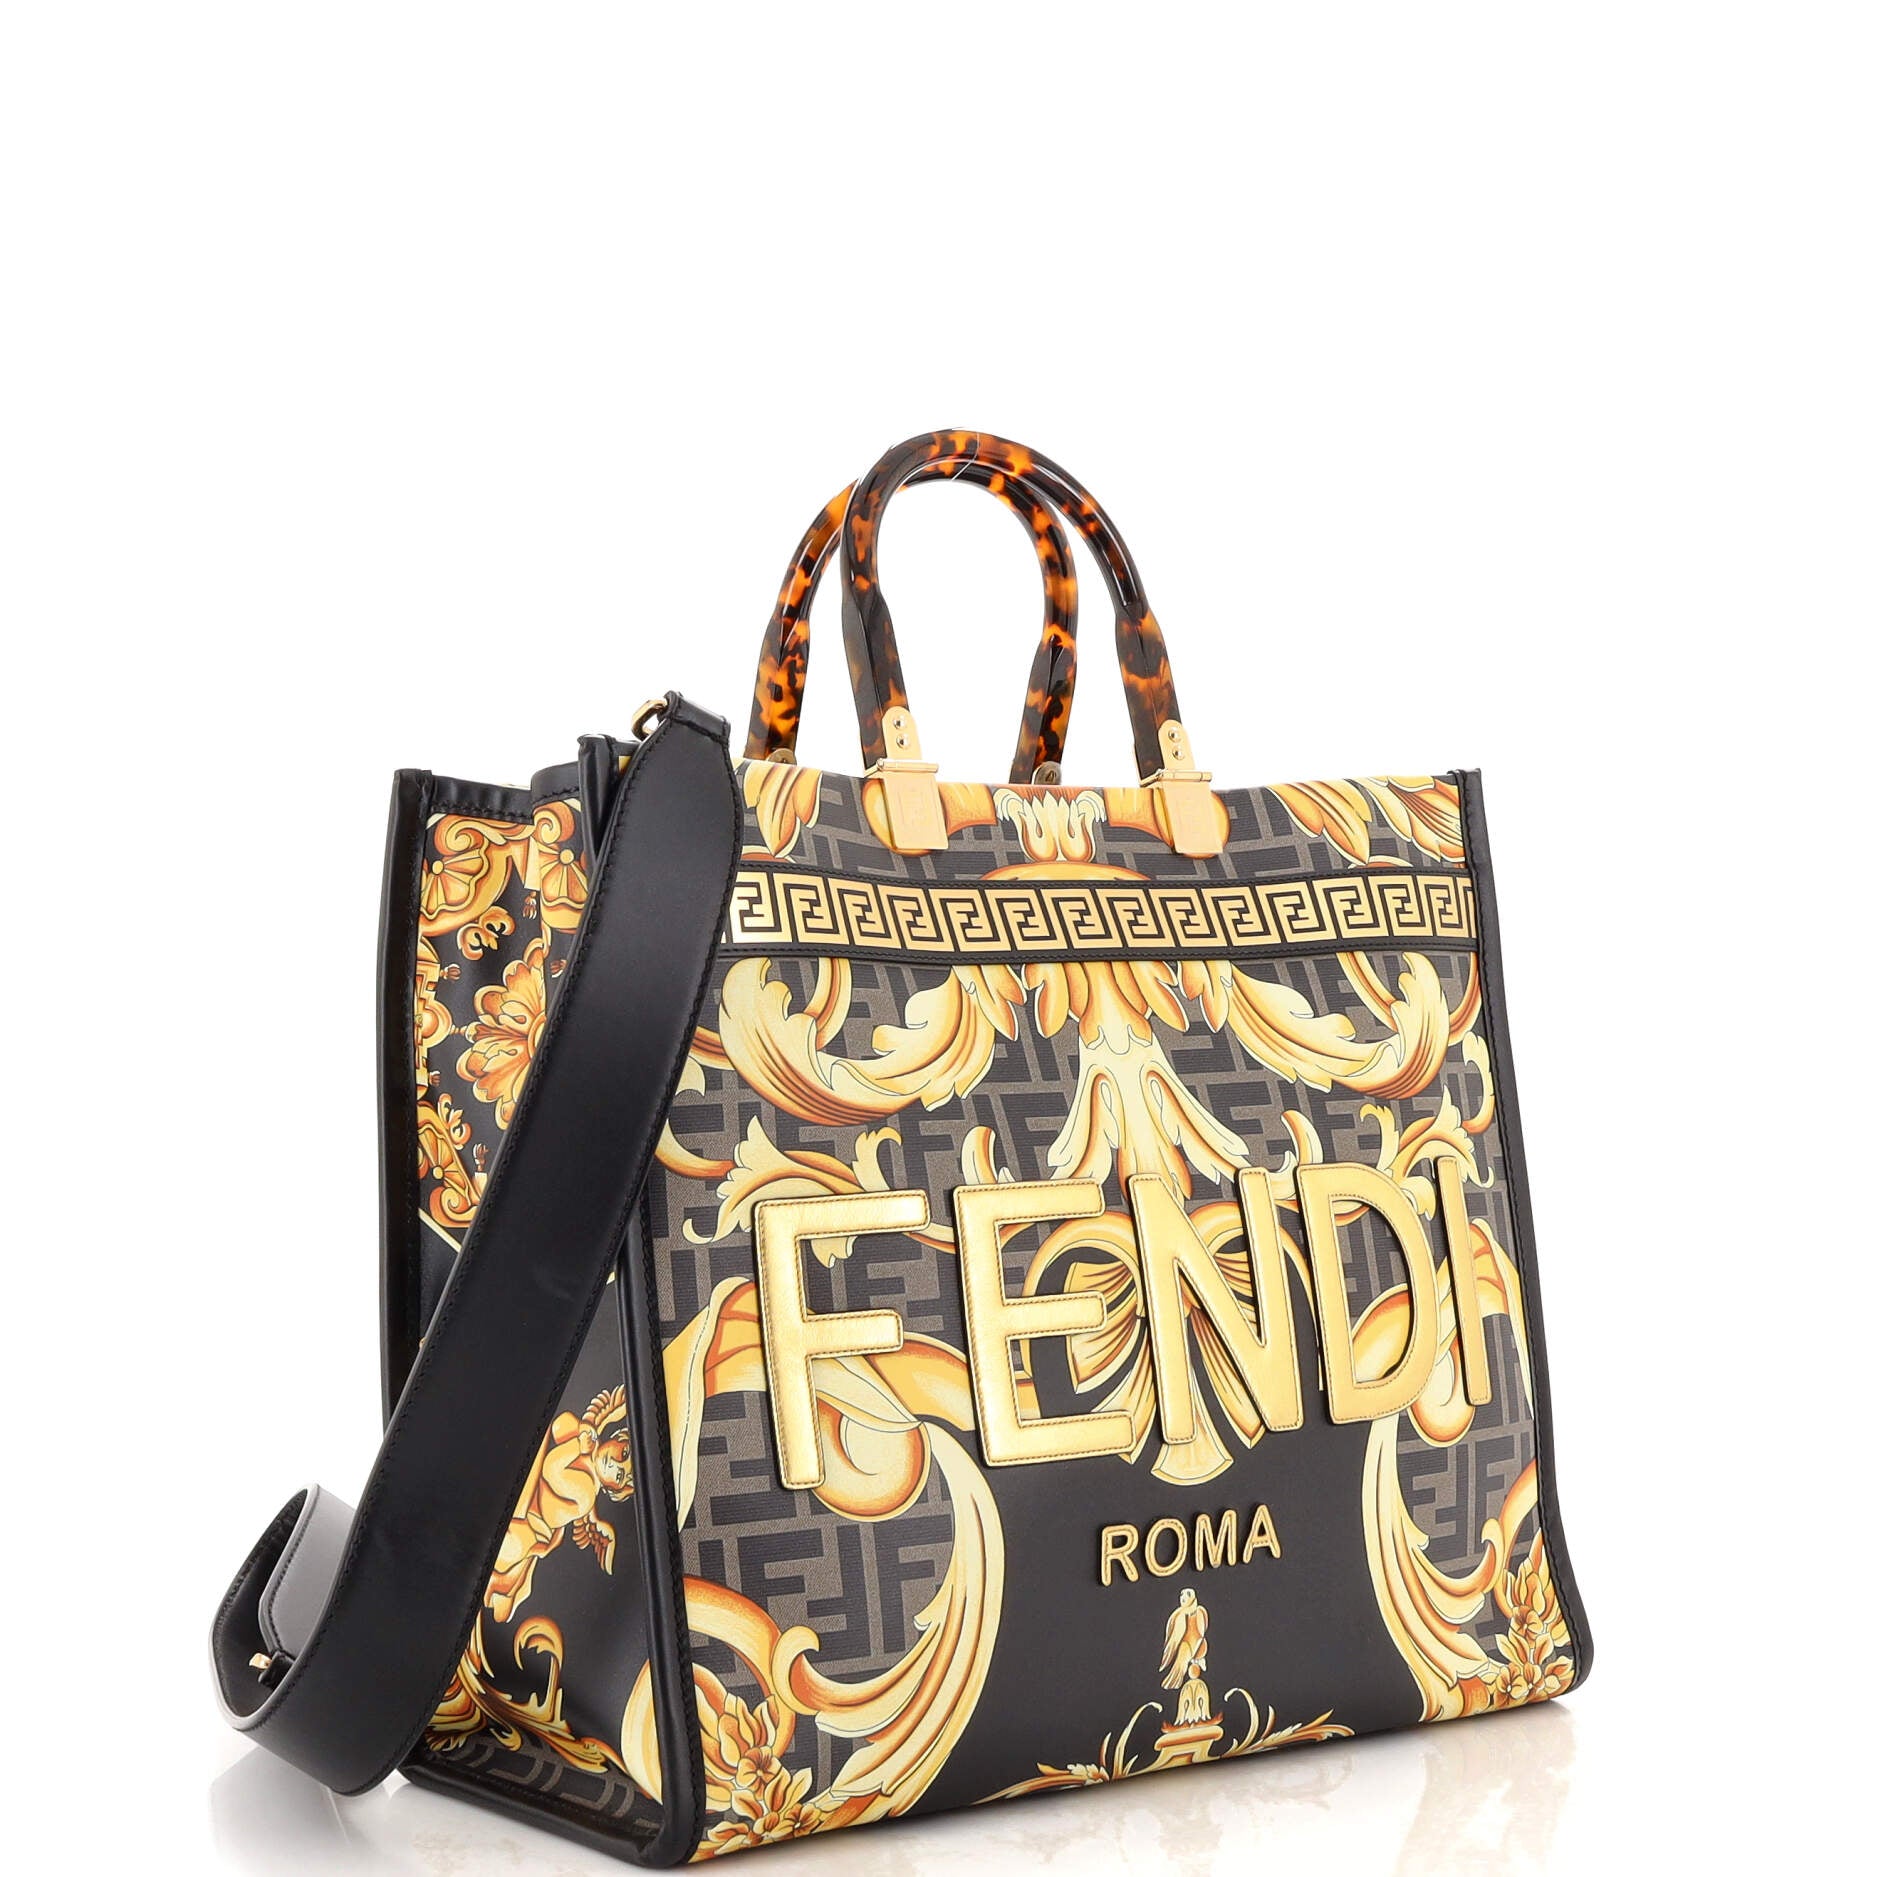 Fendi x Versace Fendace Convertible Sunshine Shopper Tote Printed Leather  Medium Black 208648323